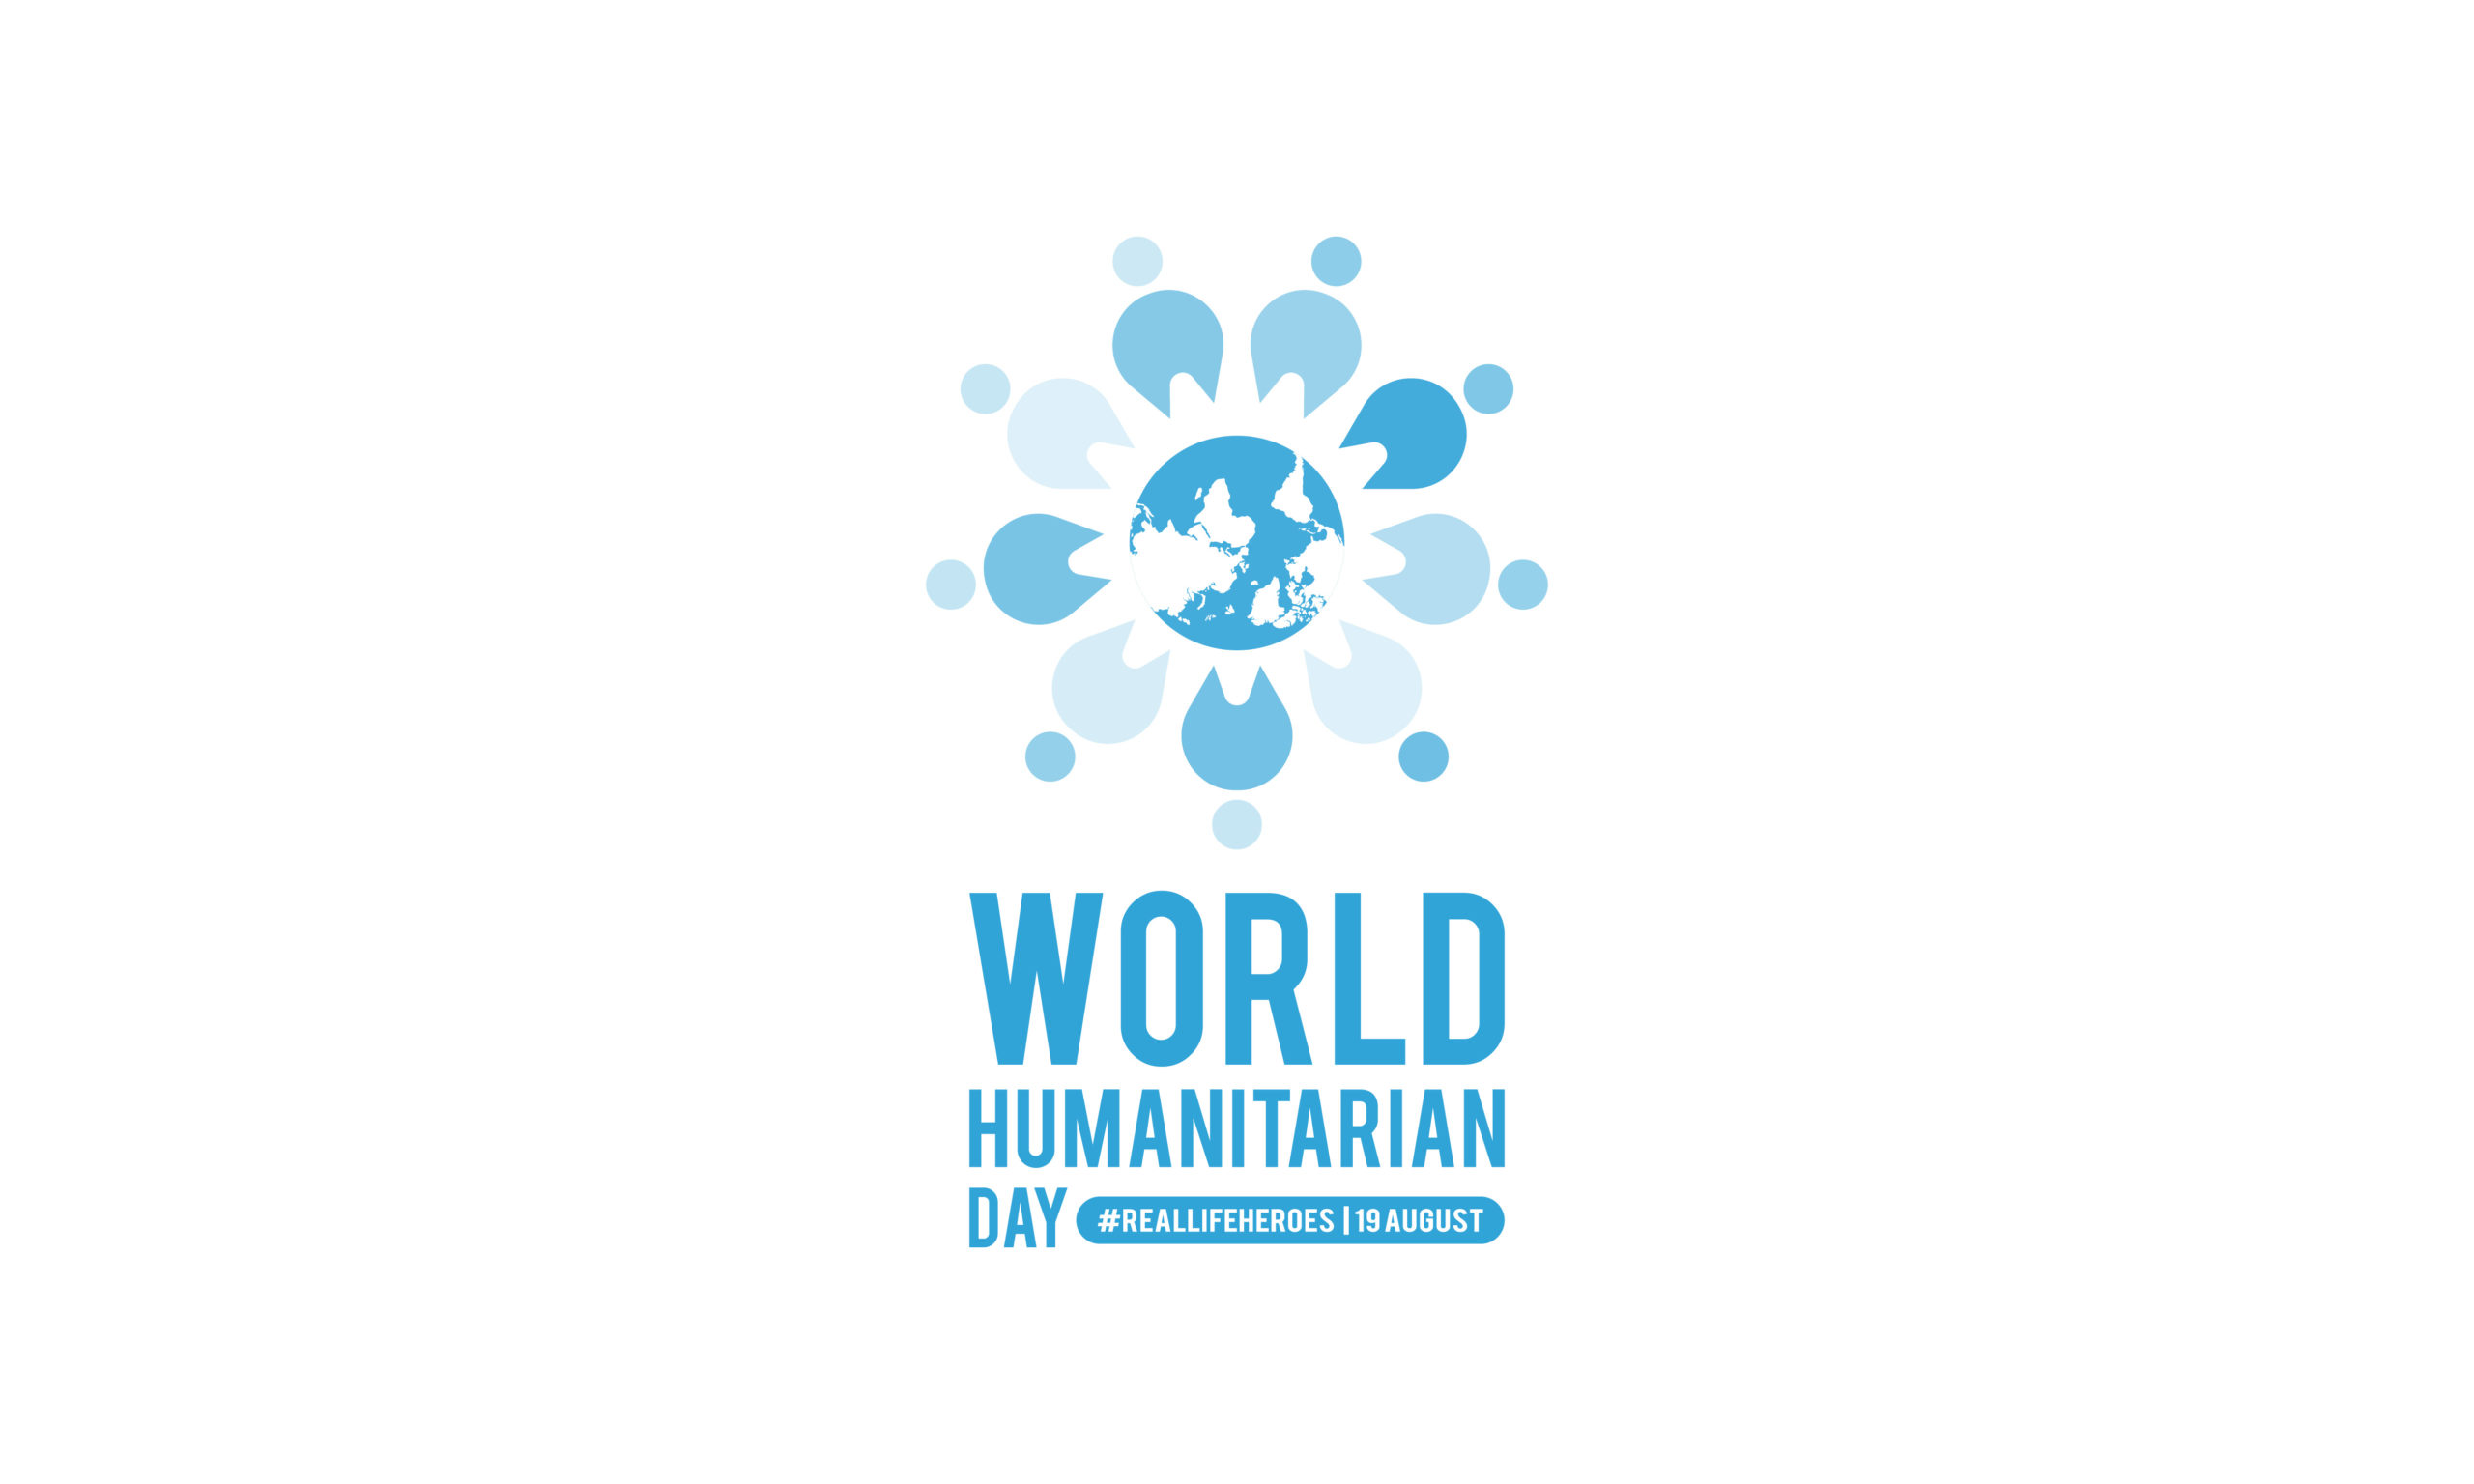 World humanitarian day